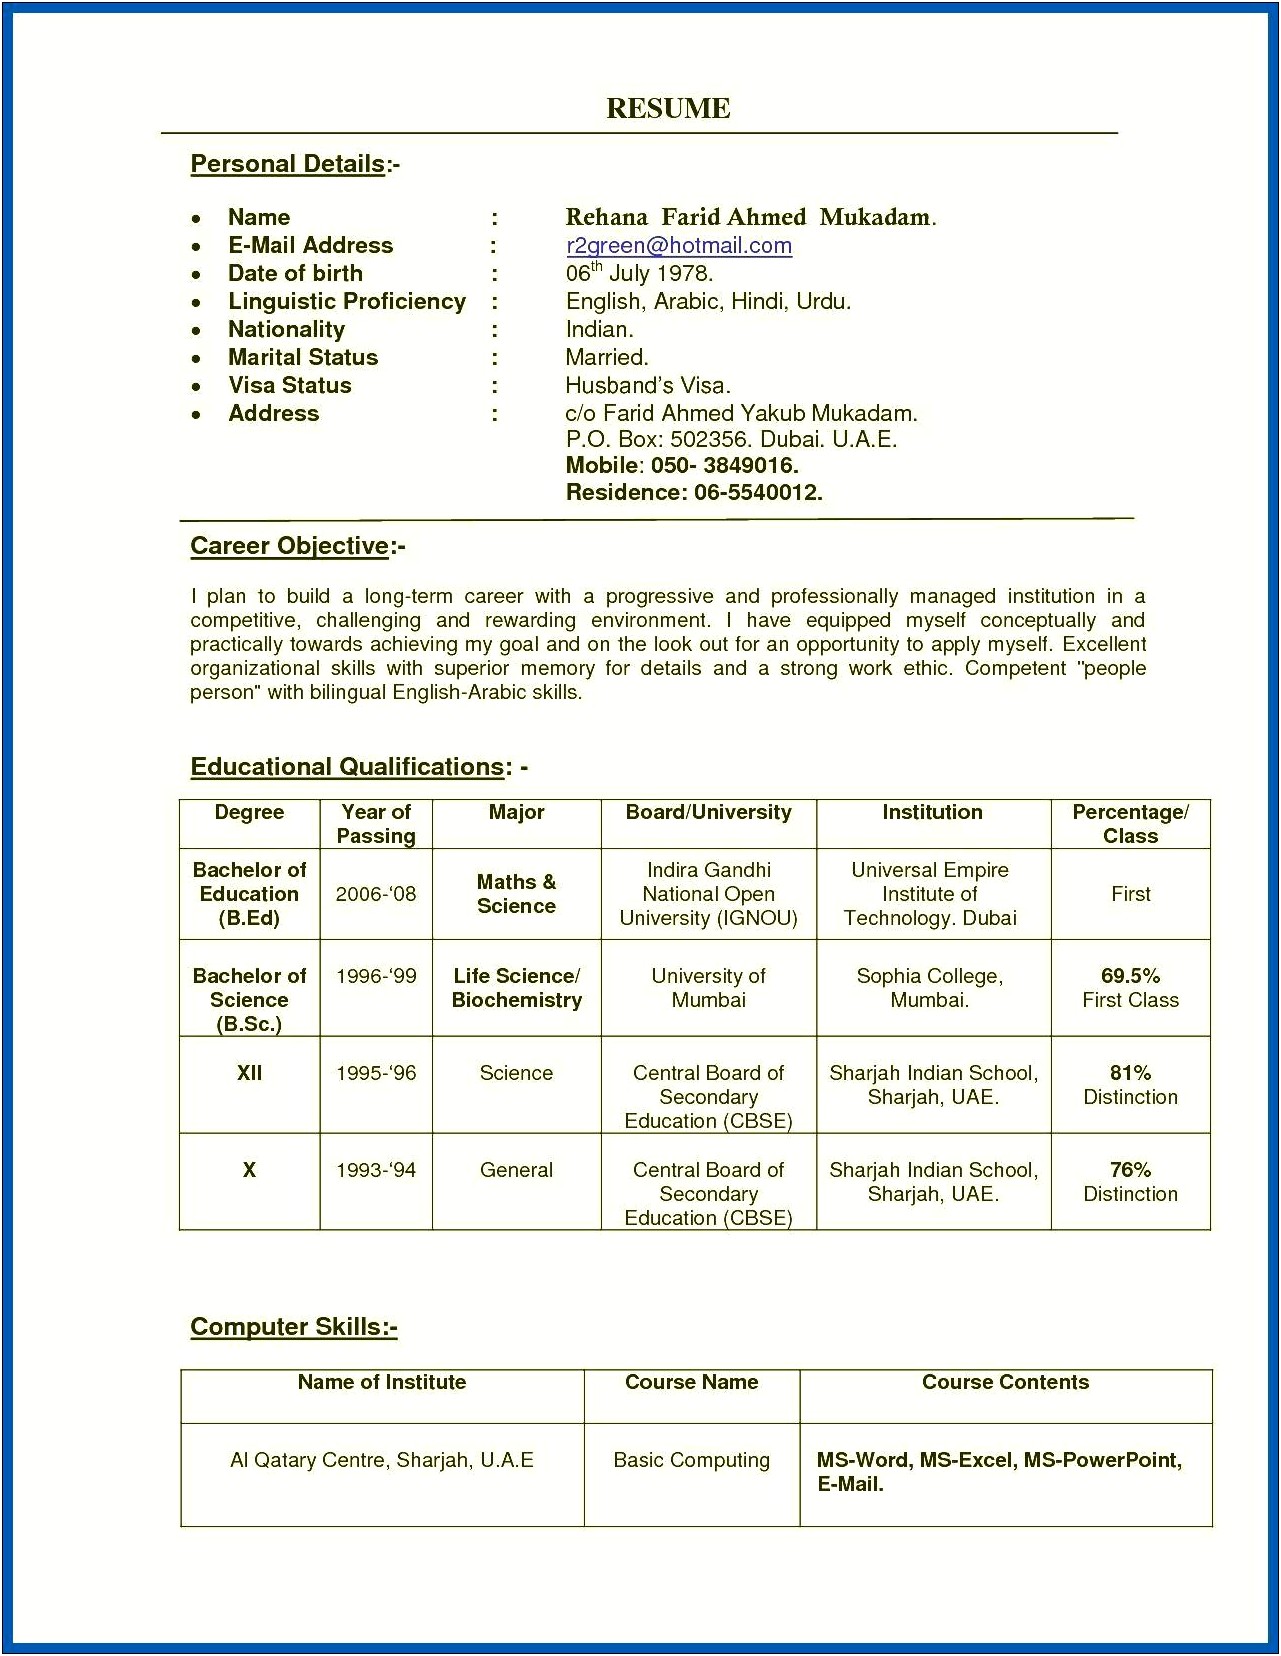 Resume For Teaching Job In School Pdf